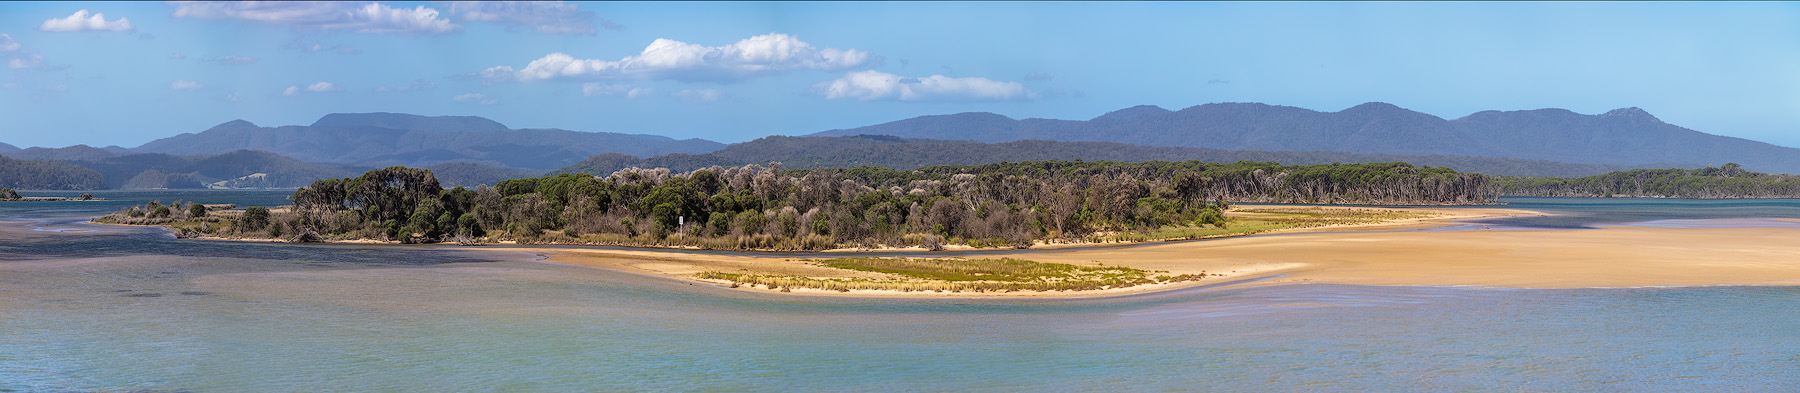 Mallacoota in the East Gippsland region of Victoria, Australia.